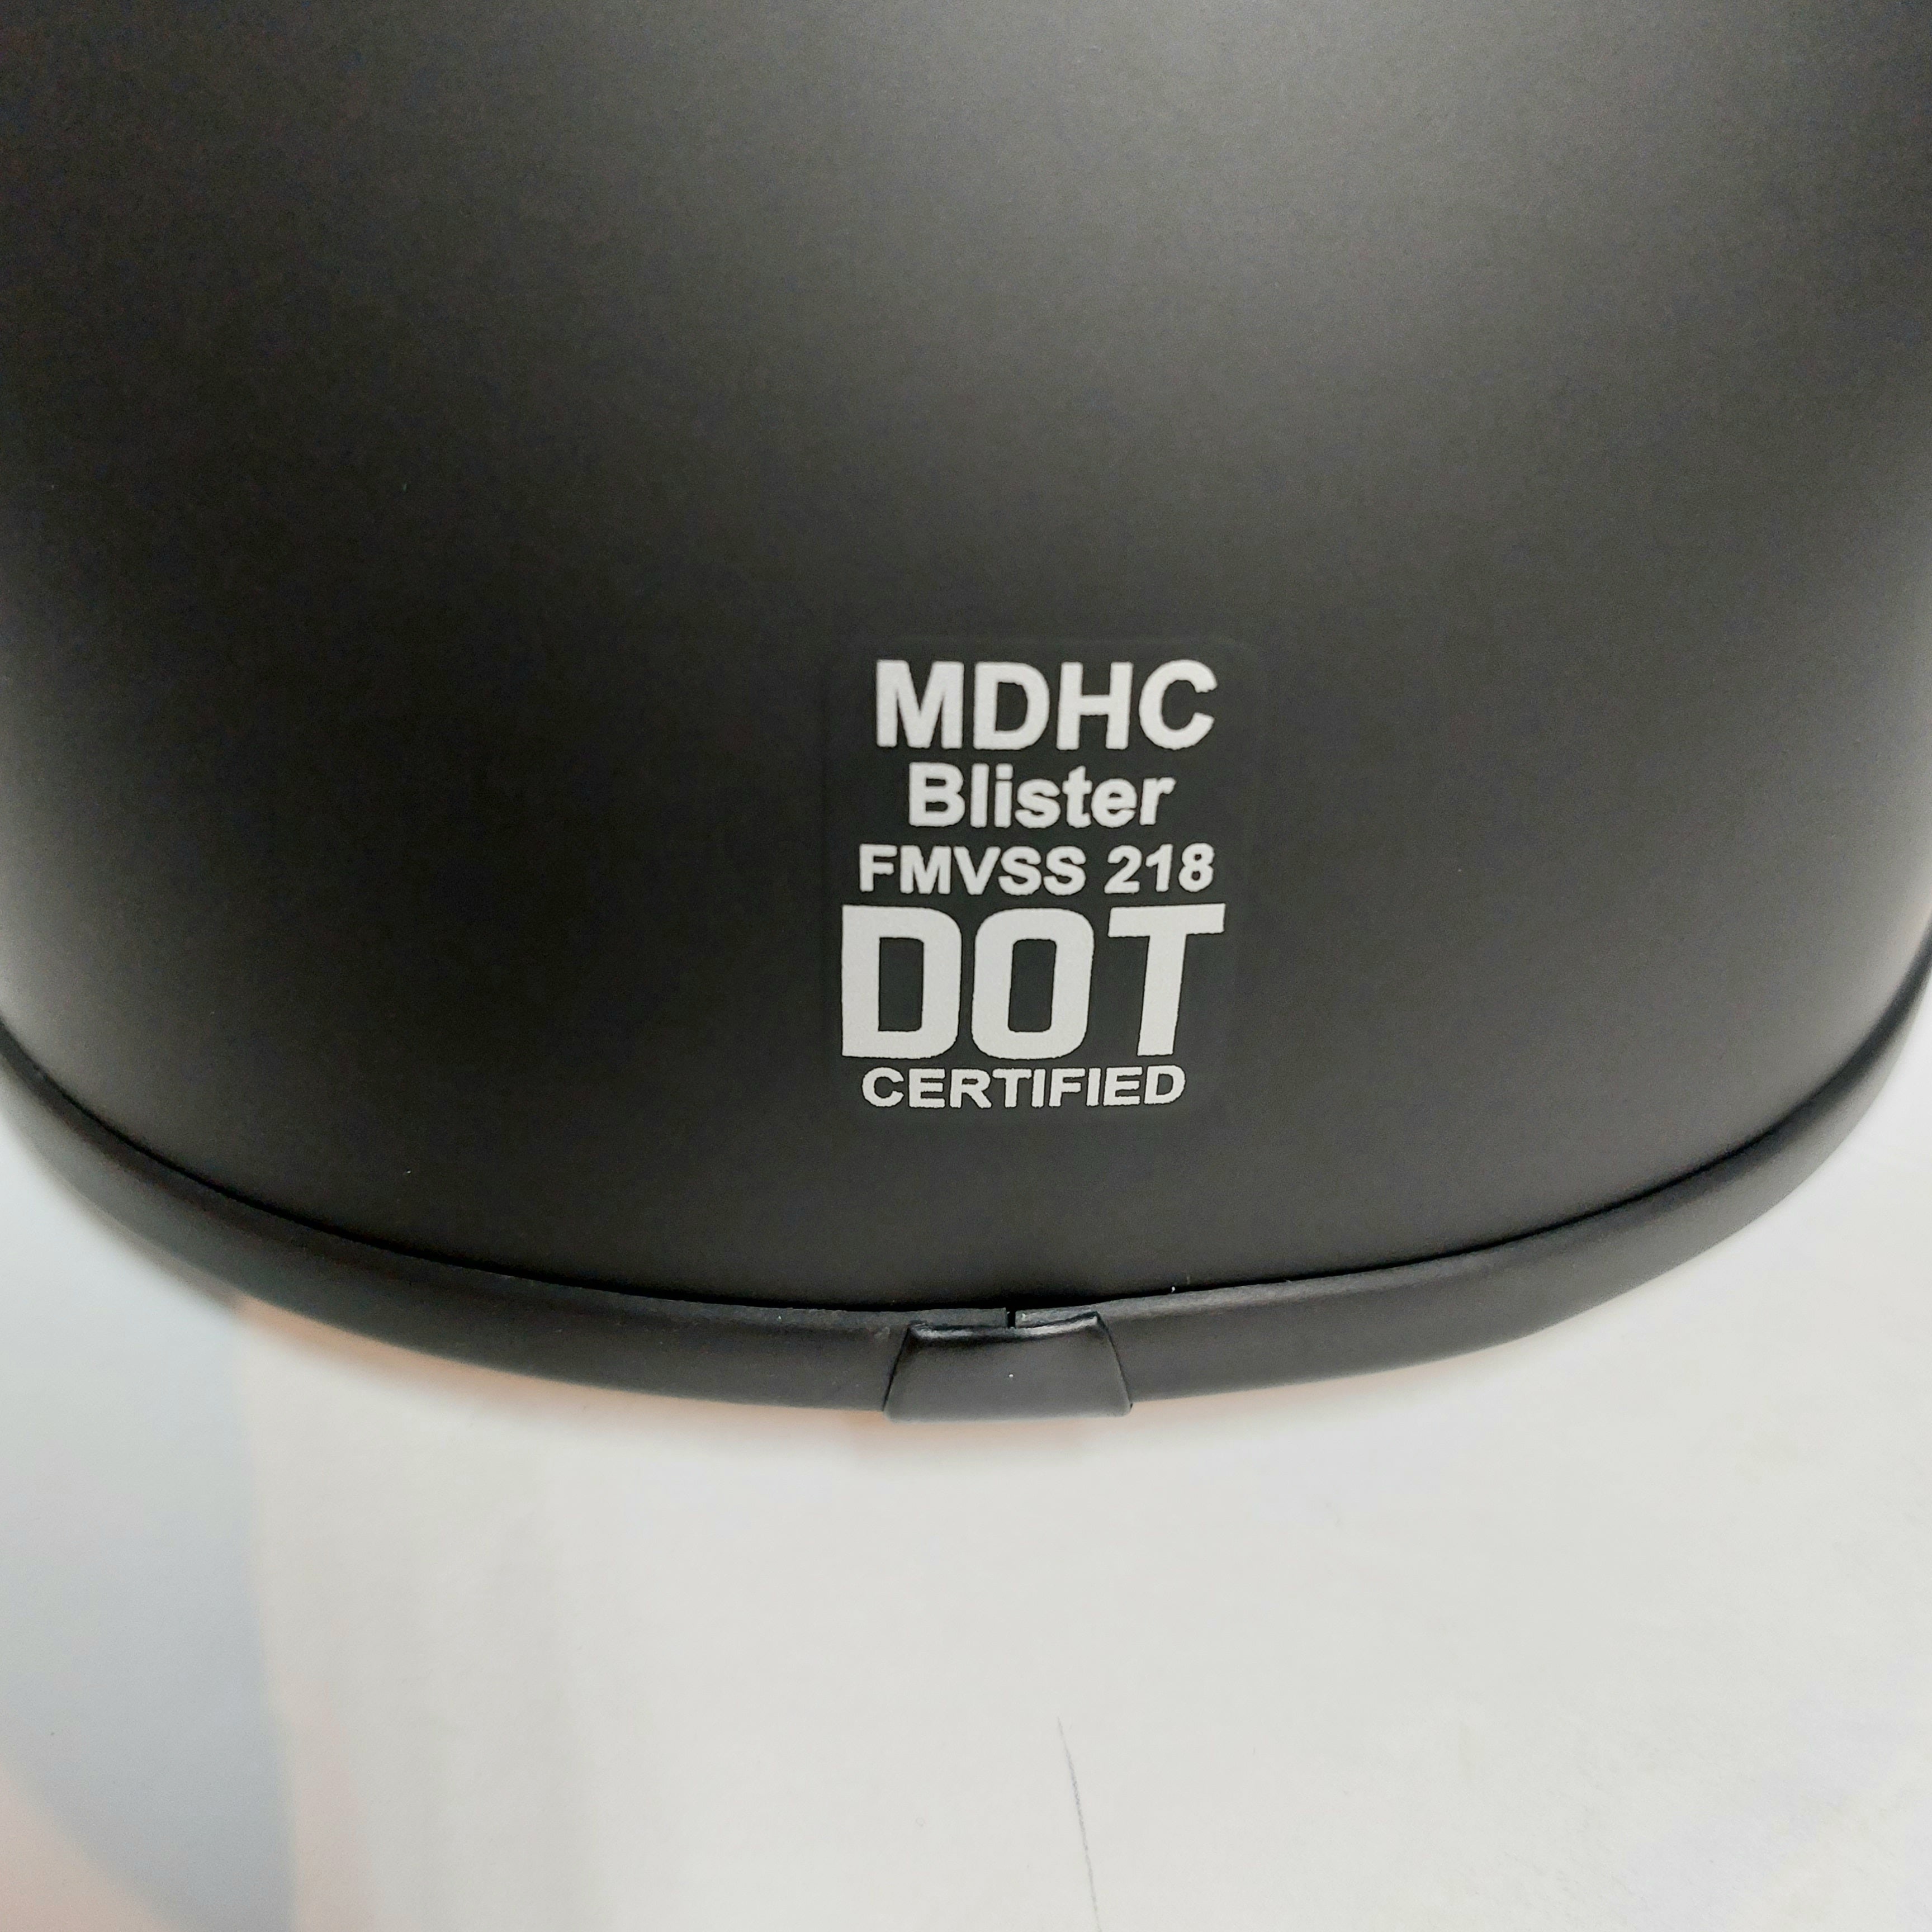 Micro DOT "Twister" Reversible Flat Black Half Helmet No Mushroom Look